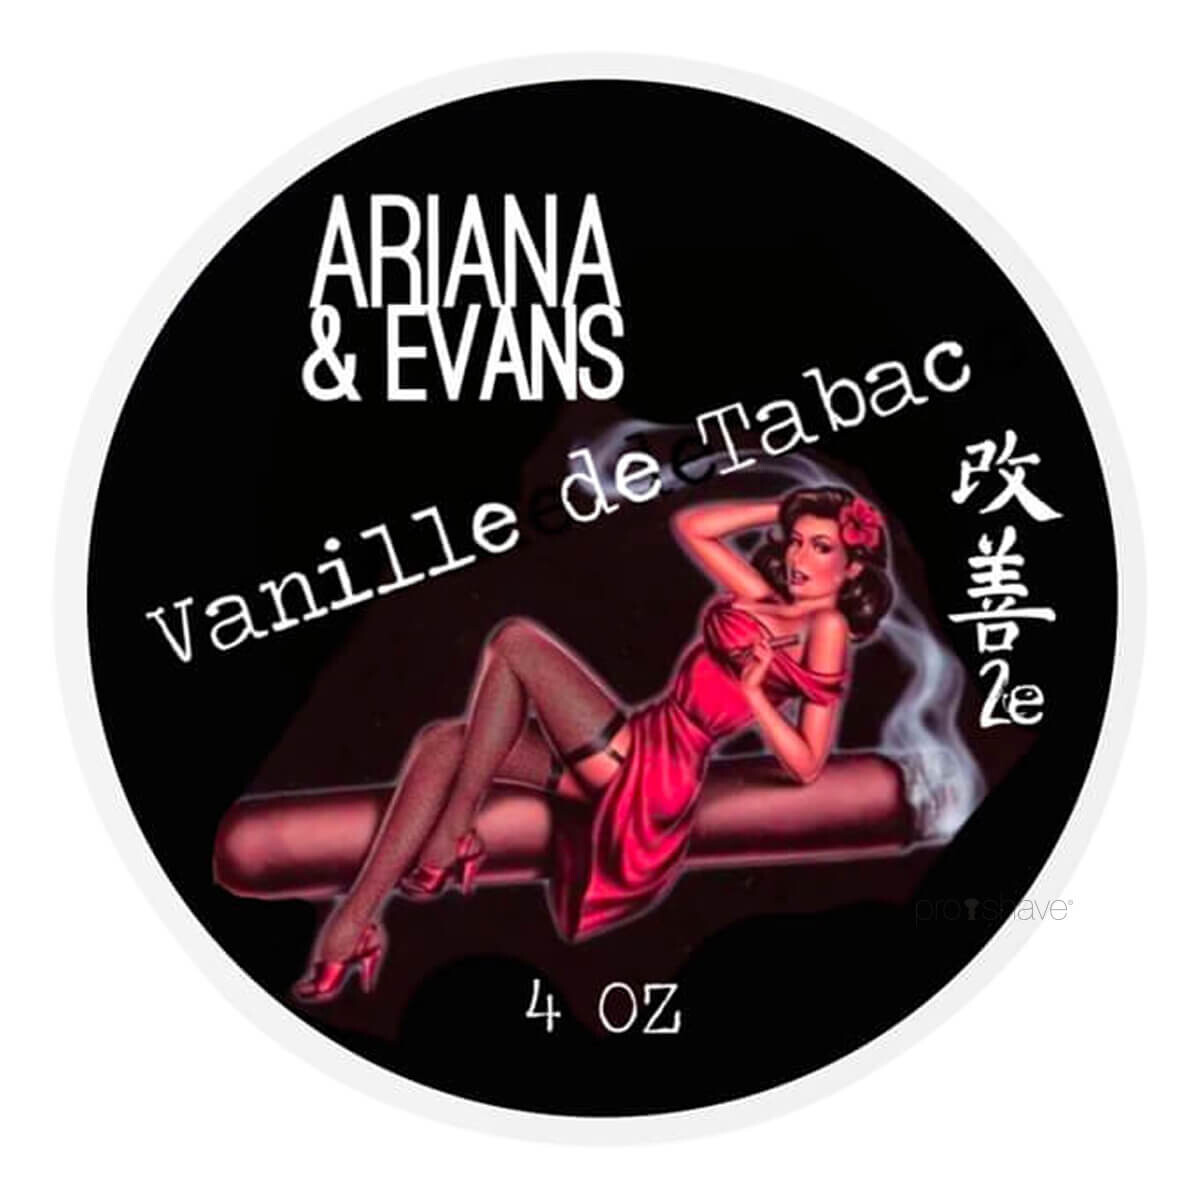 Ariana & Evans Barbersæbe, Vanille de Tabac, 118 ml.